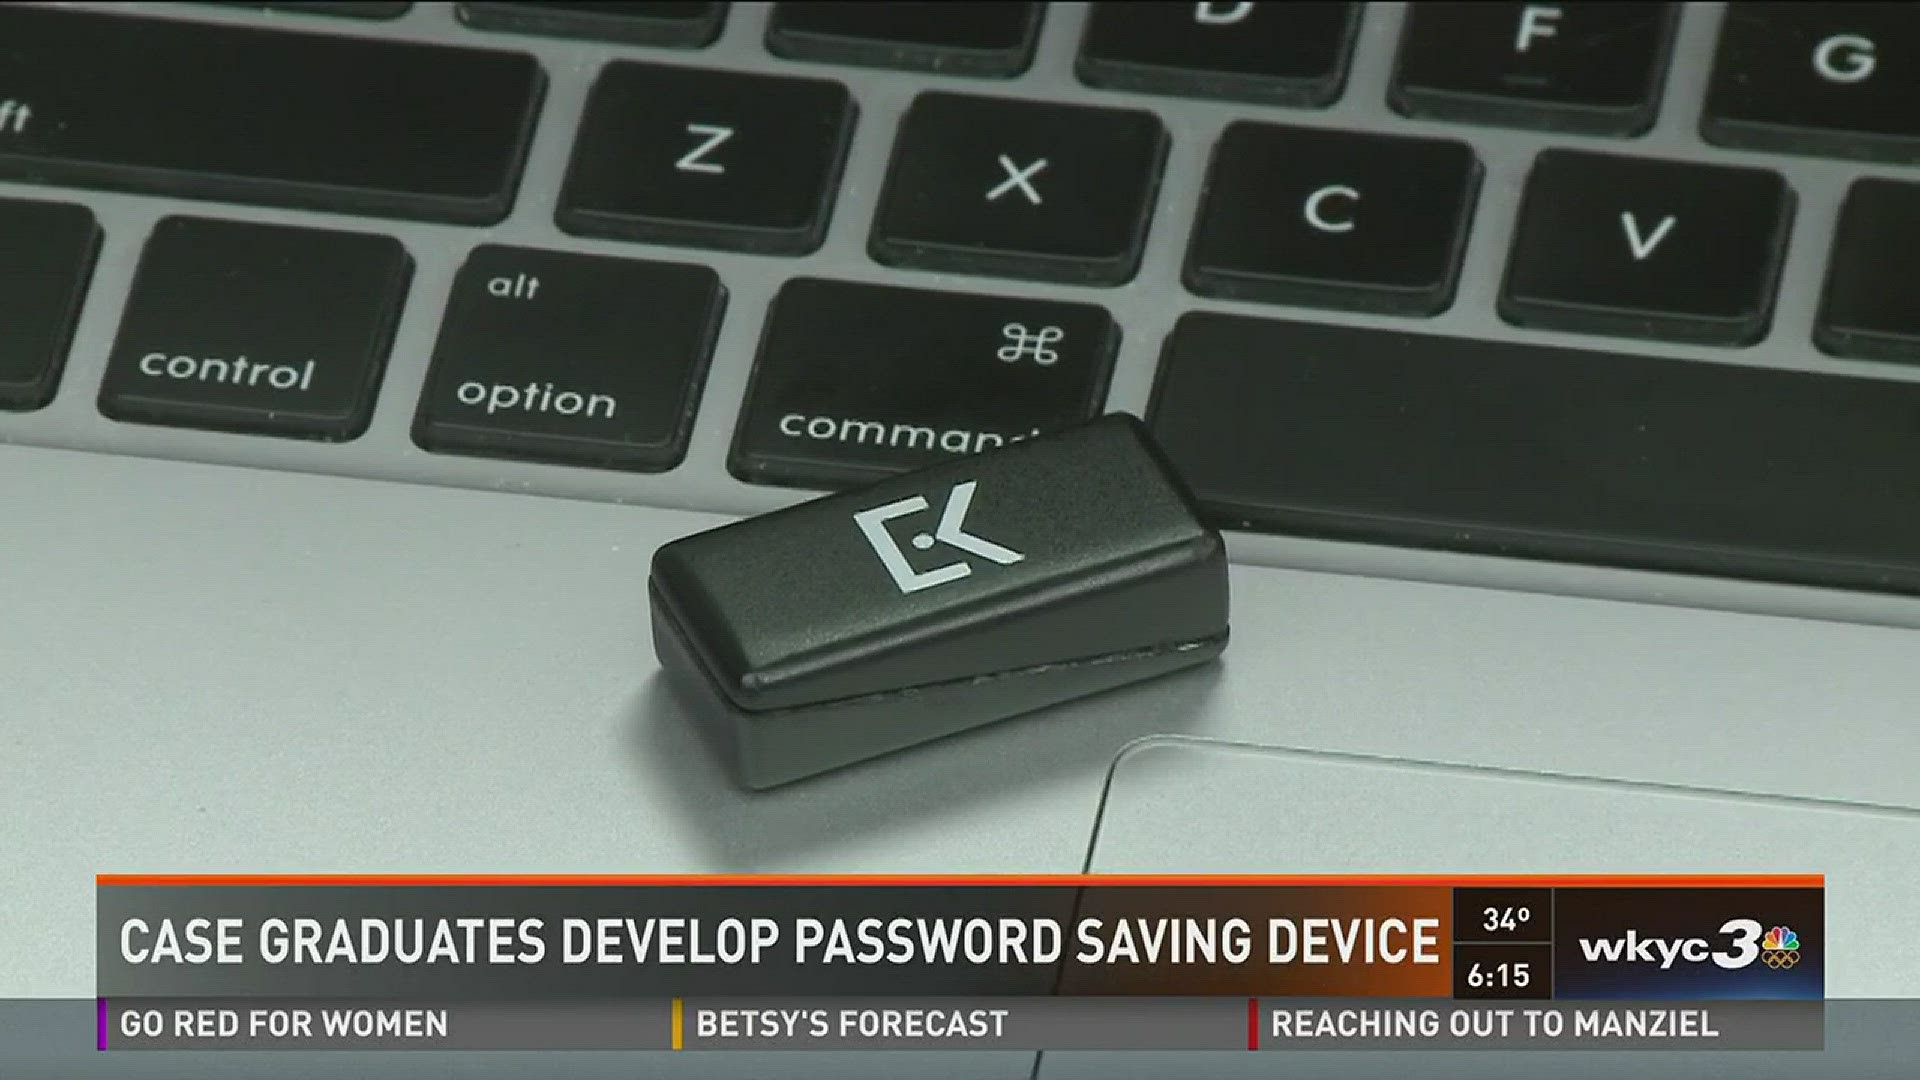 Students develop password saving device